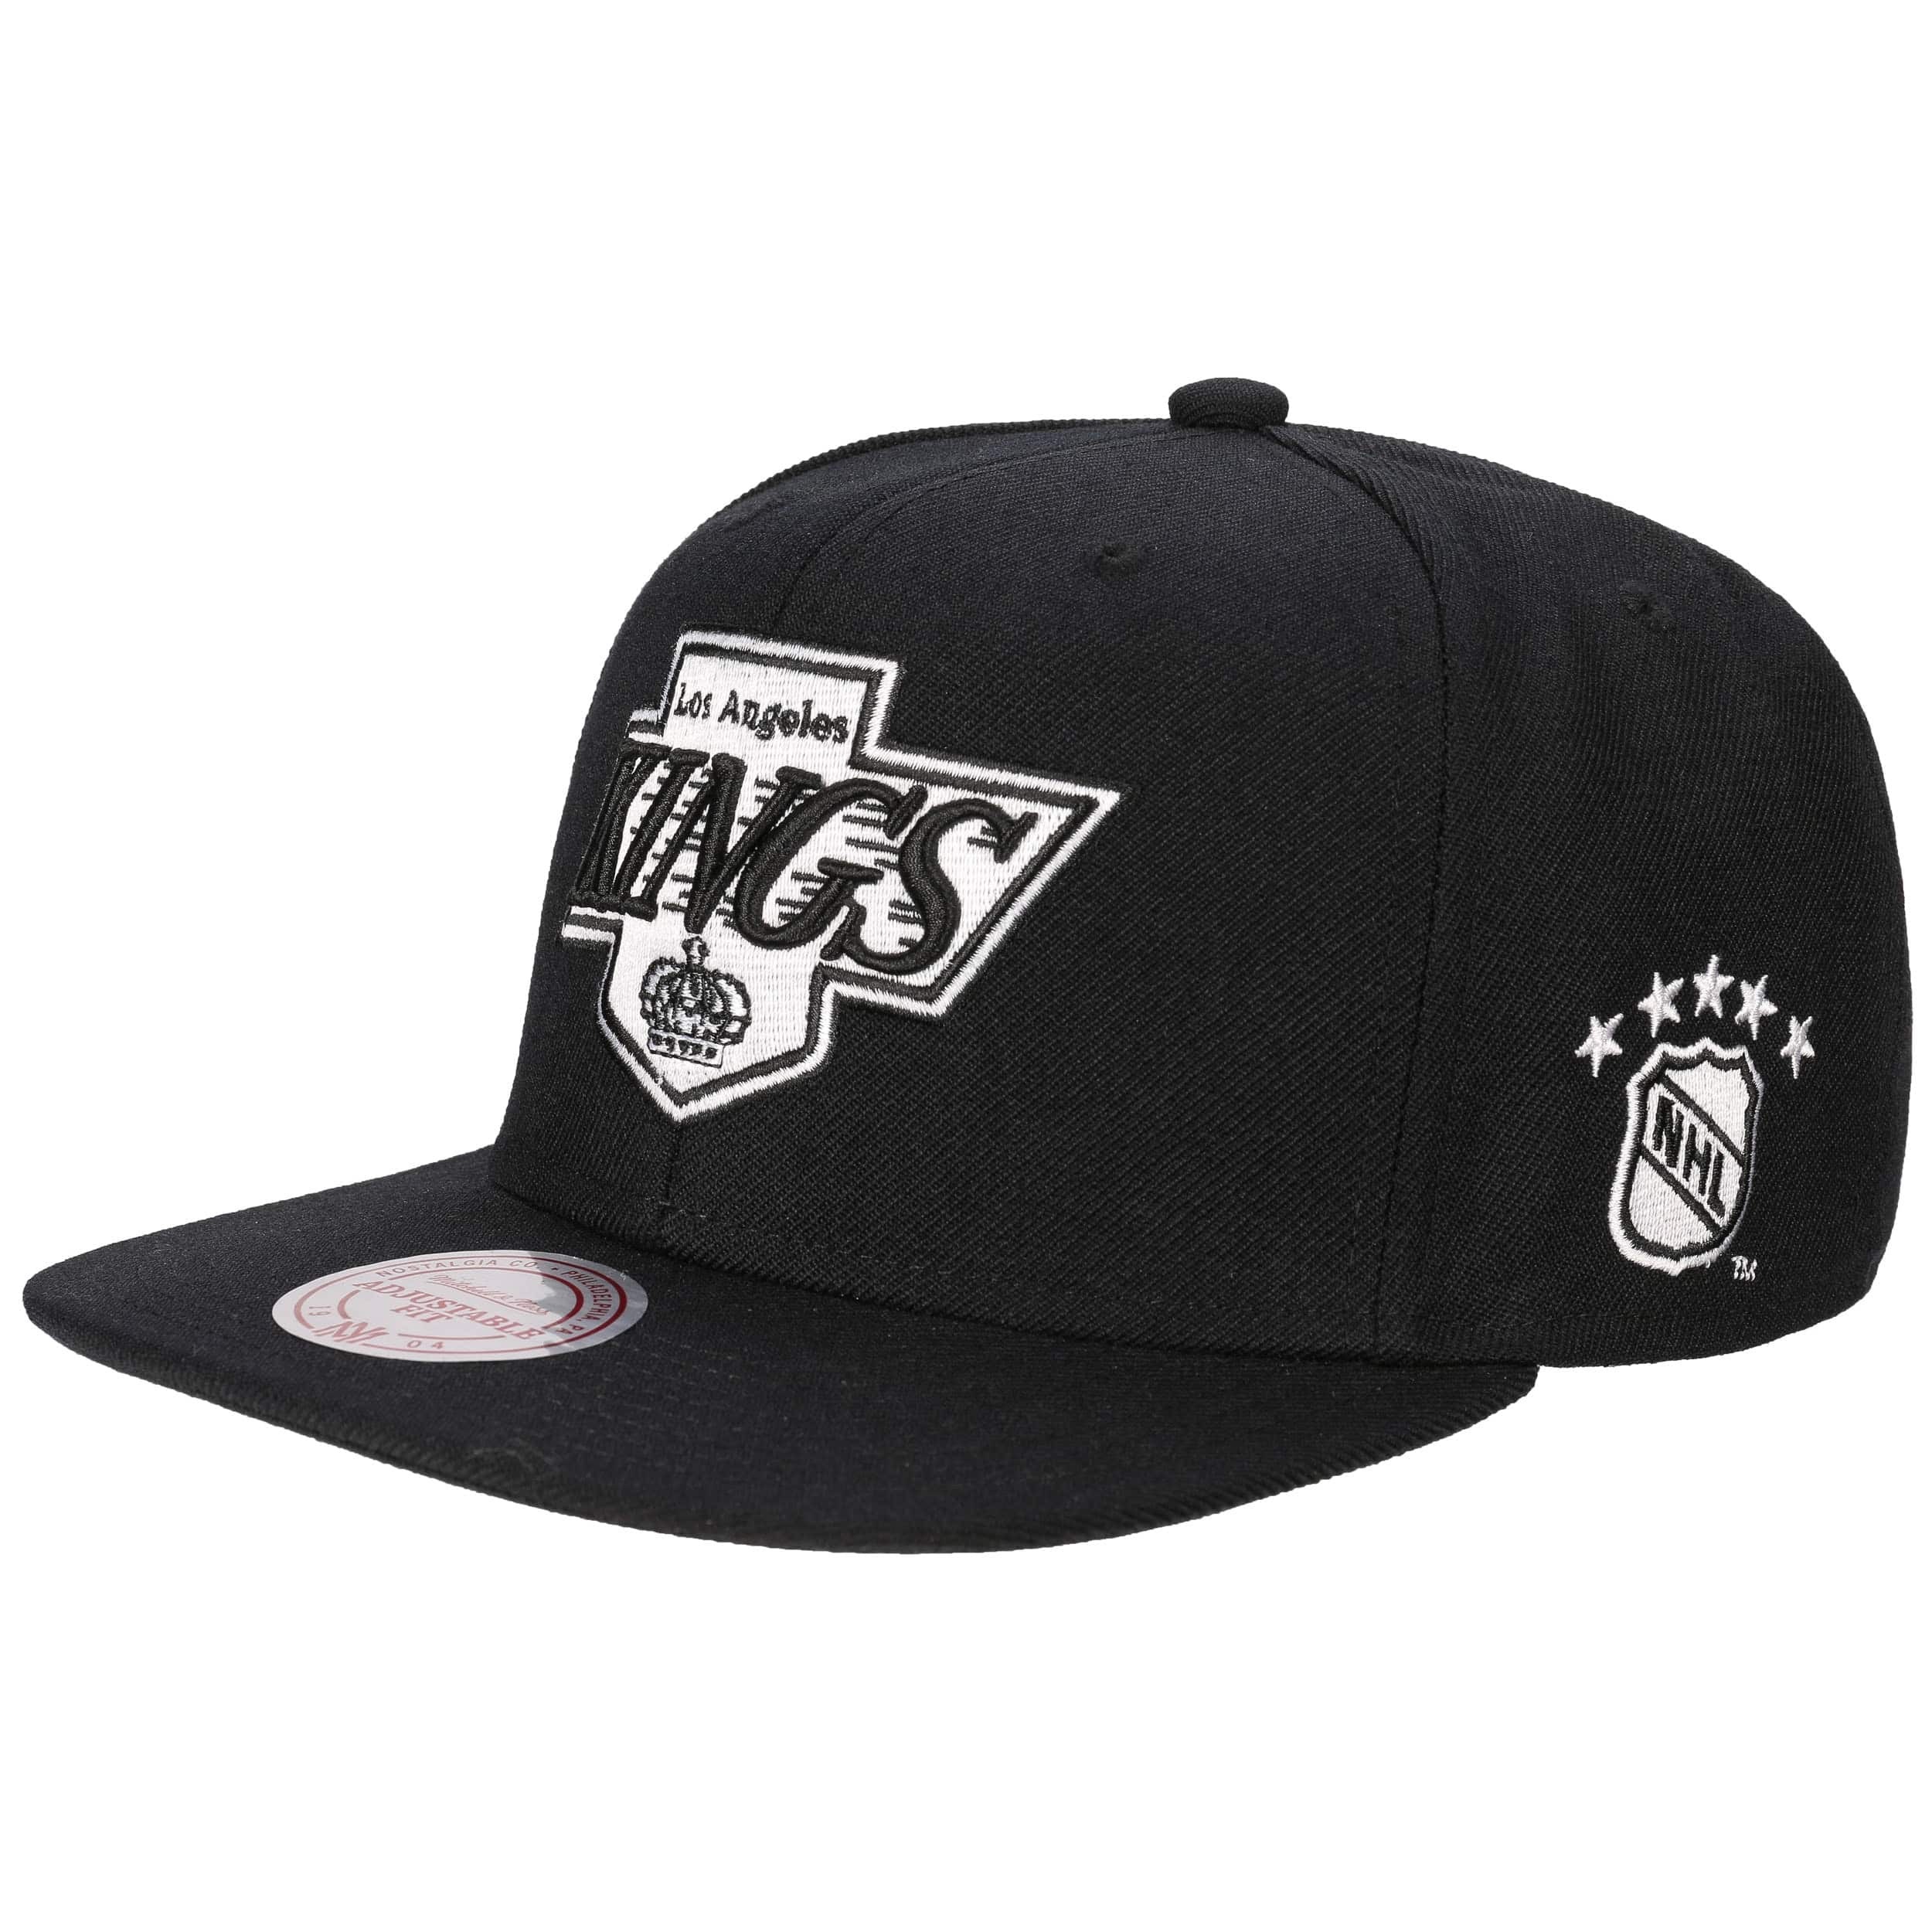 B&W LA Kings Cap by Mitchell & Ness, EUR 24,95 --> Hats, caps & beanies ...